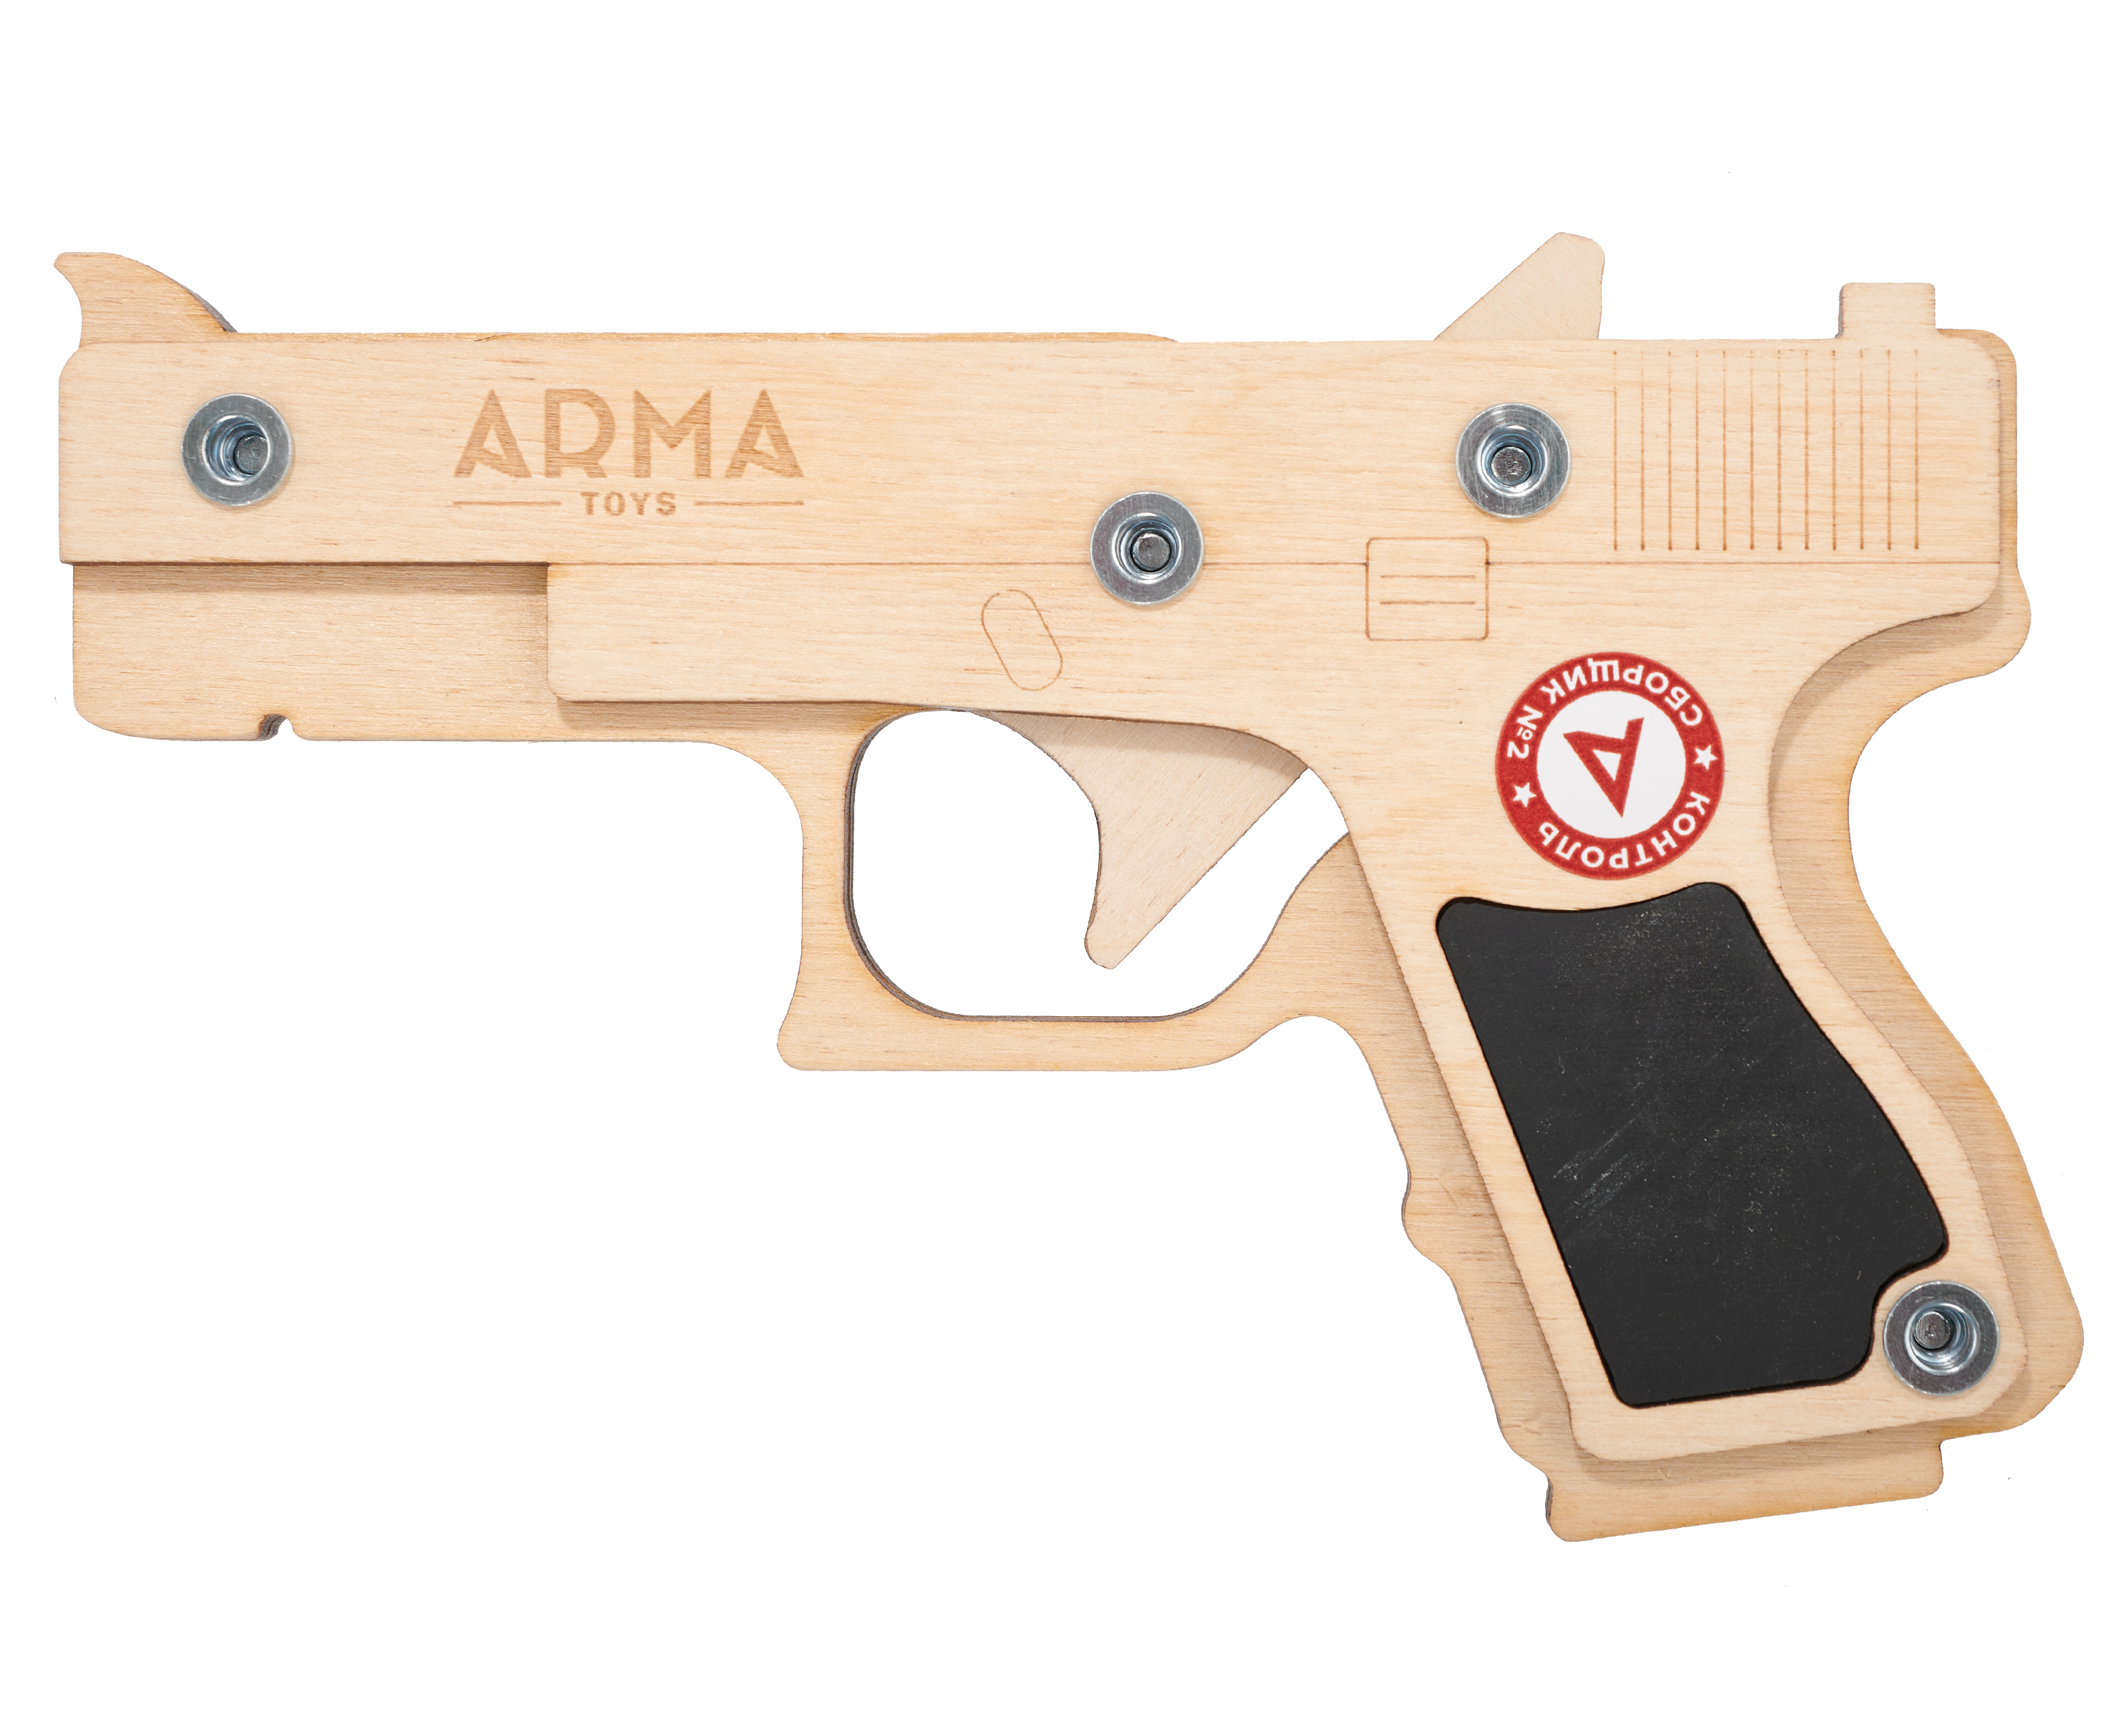 Резинкострел игрушечный Arma toys пистолет Glock макет, Compact, ATL001 битва за францию 2 arma toys автомат мп 40 и пистолет кольт резинкострелы в наборе